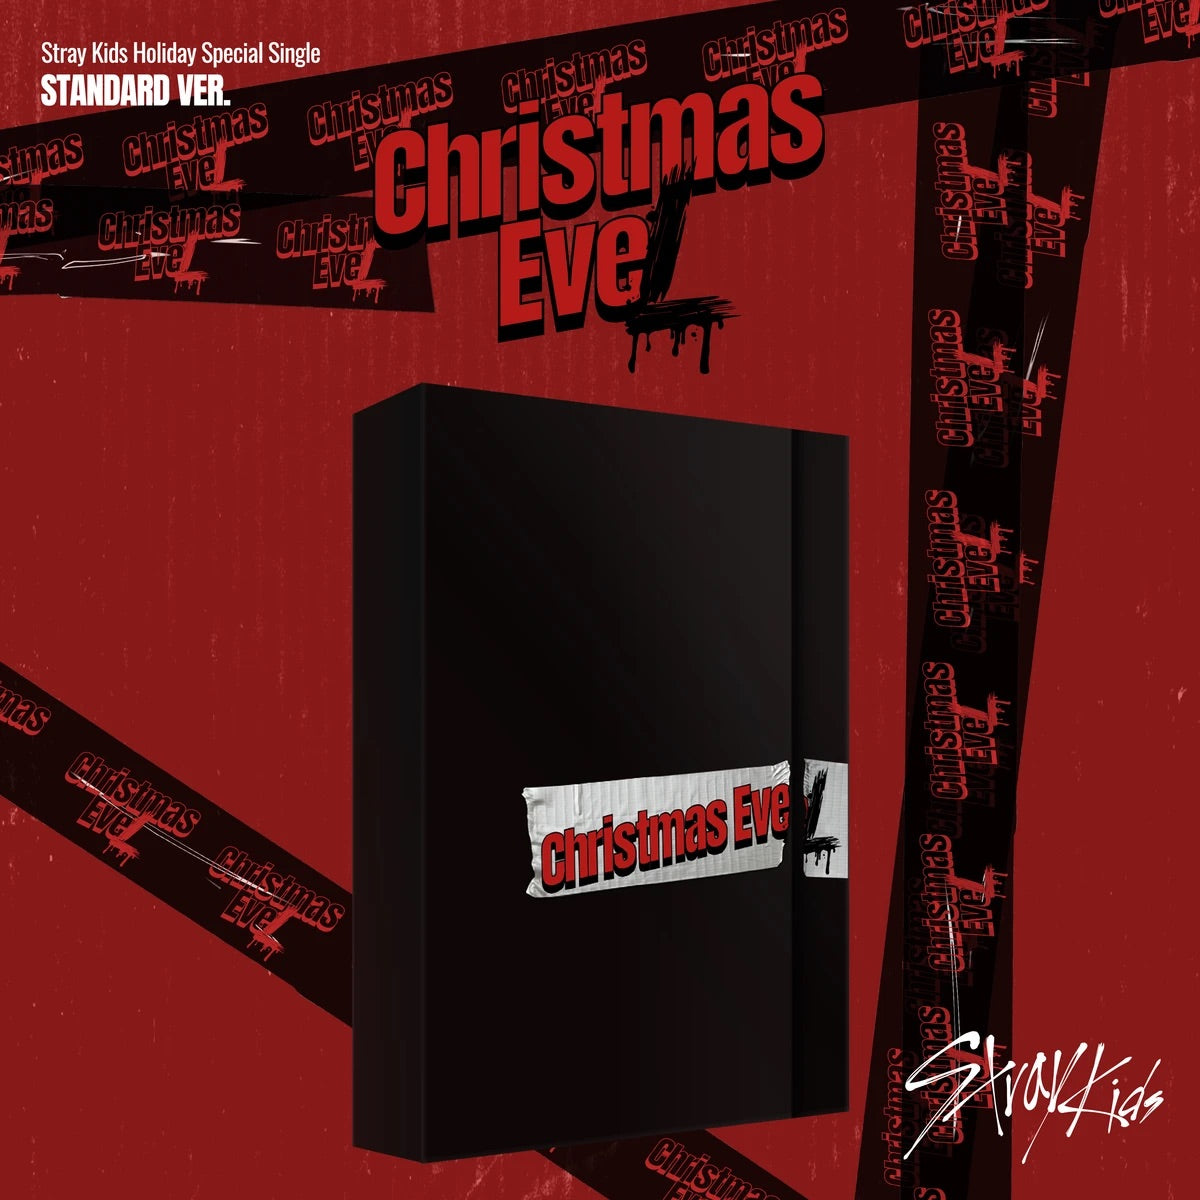 Stray Kids - Holiday Special Single Album - ‘CHRISTMAS EVEL’ (Standard Version)